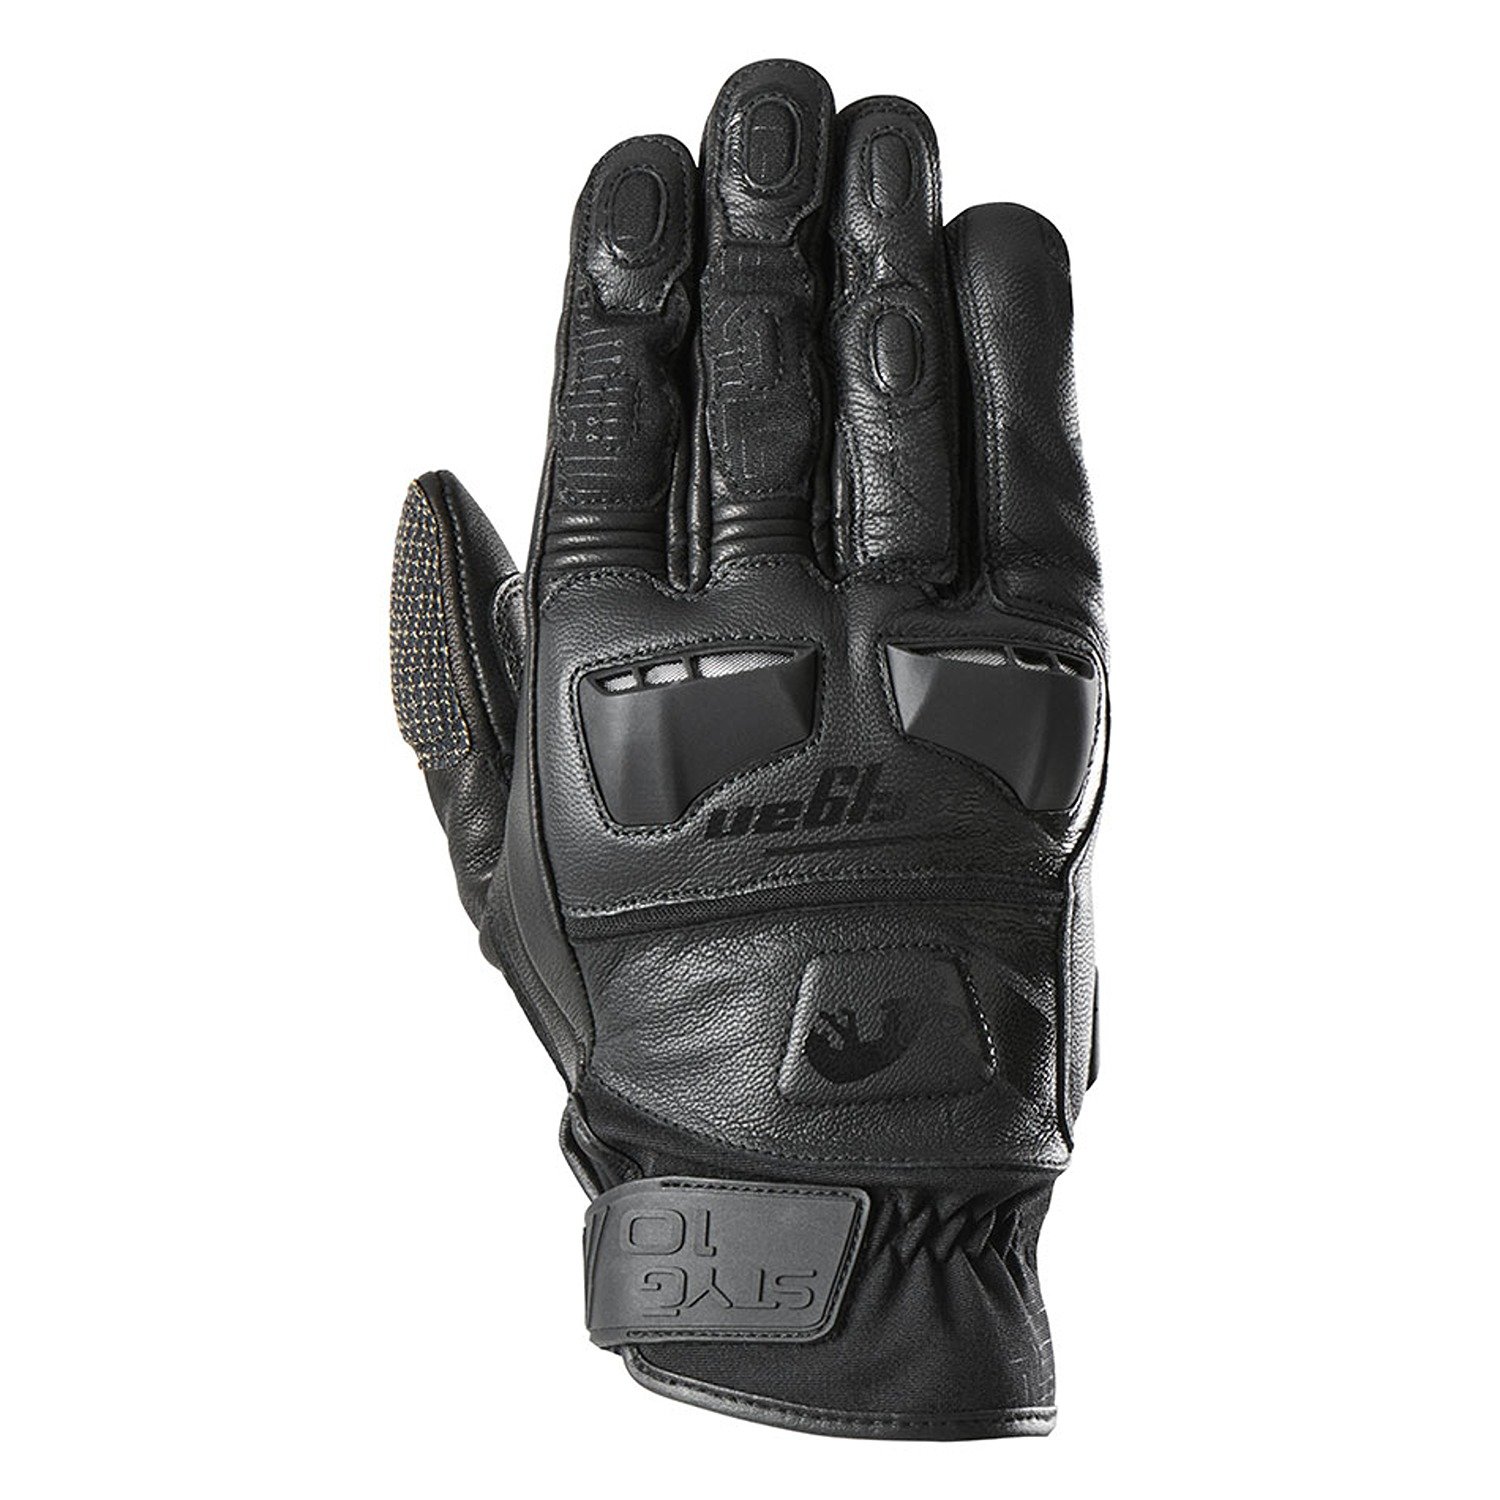 Image of Furygan Styg10 Gloves Black Size XL ID 3435980379179